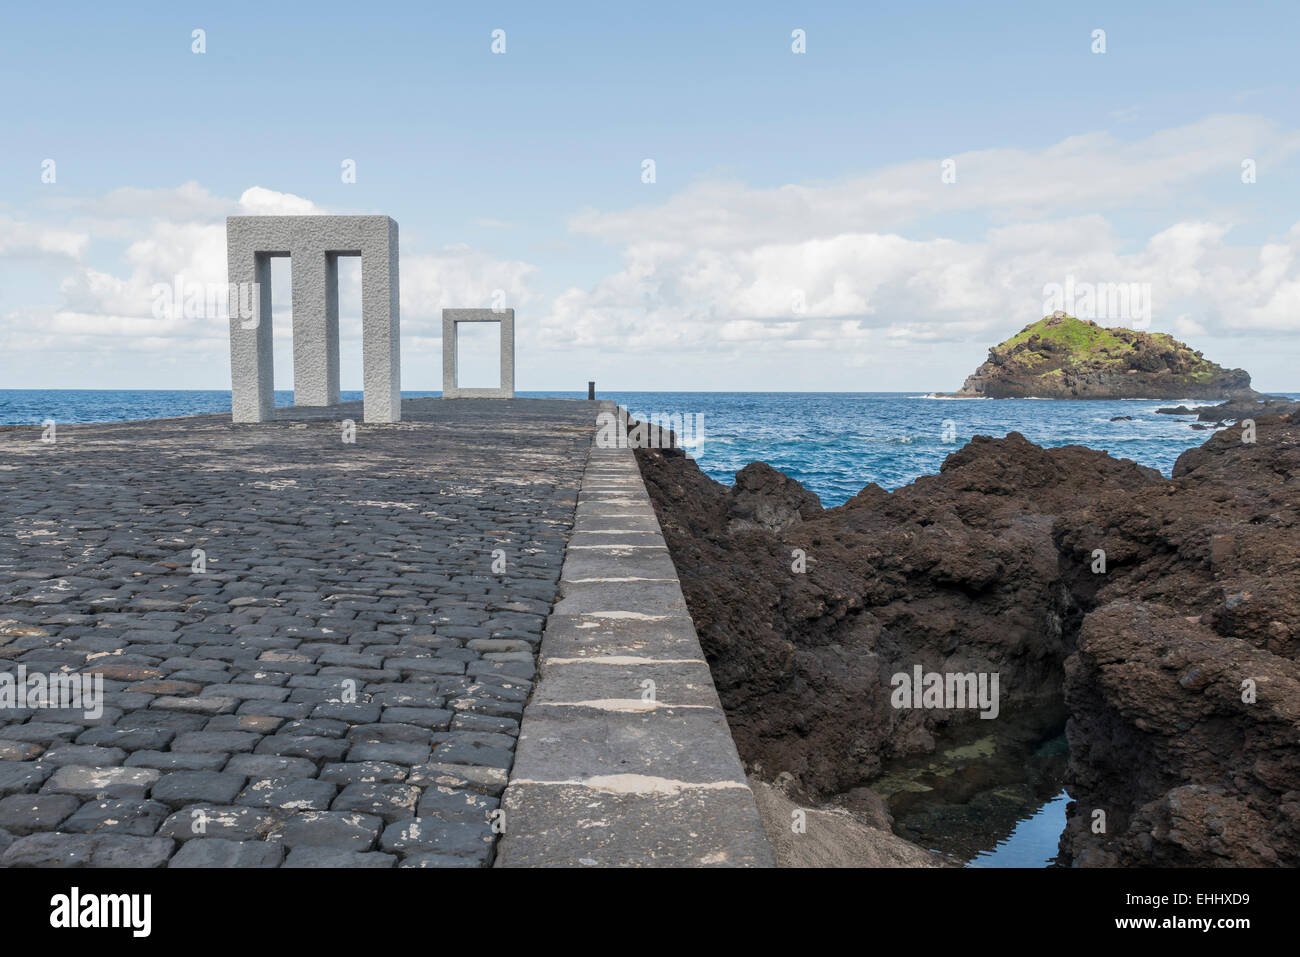 Pier of Garachico on Tenerife in Spain with art, island and lava rocks. Stock Photo